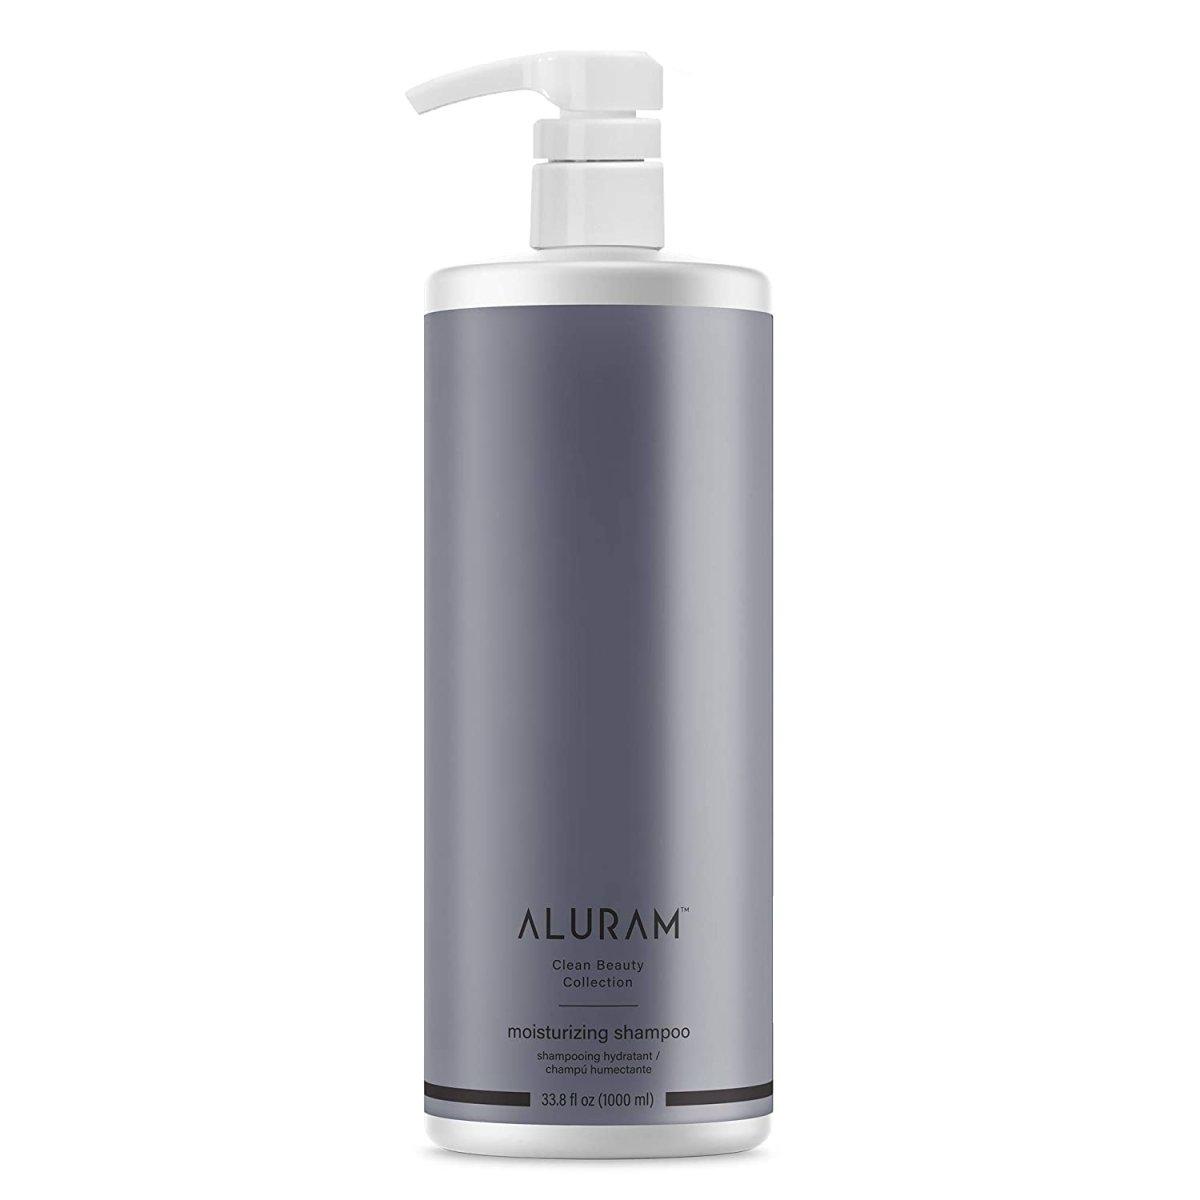 Aluram Moisturizing Shampoo